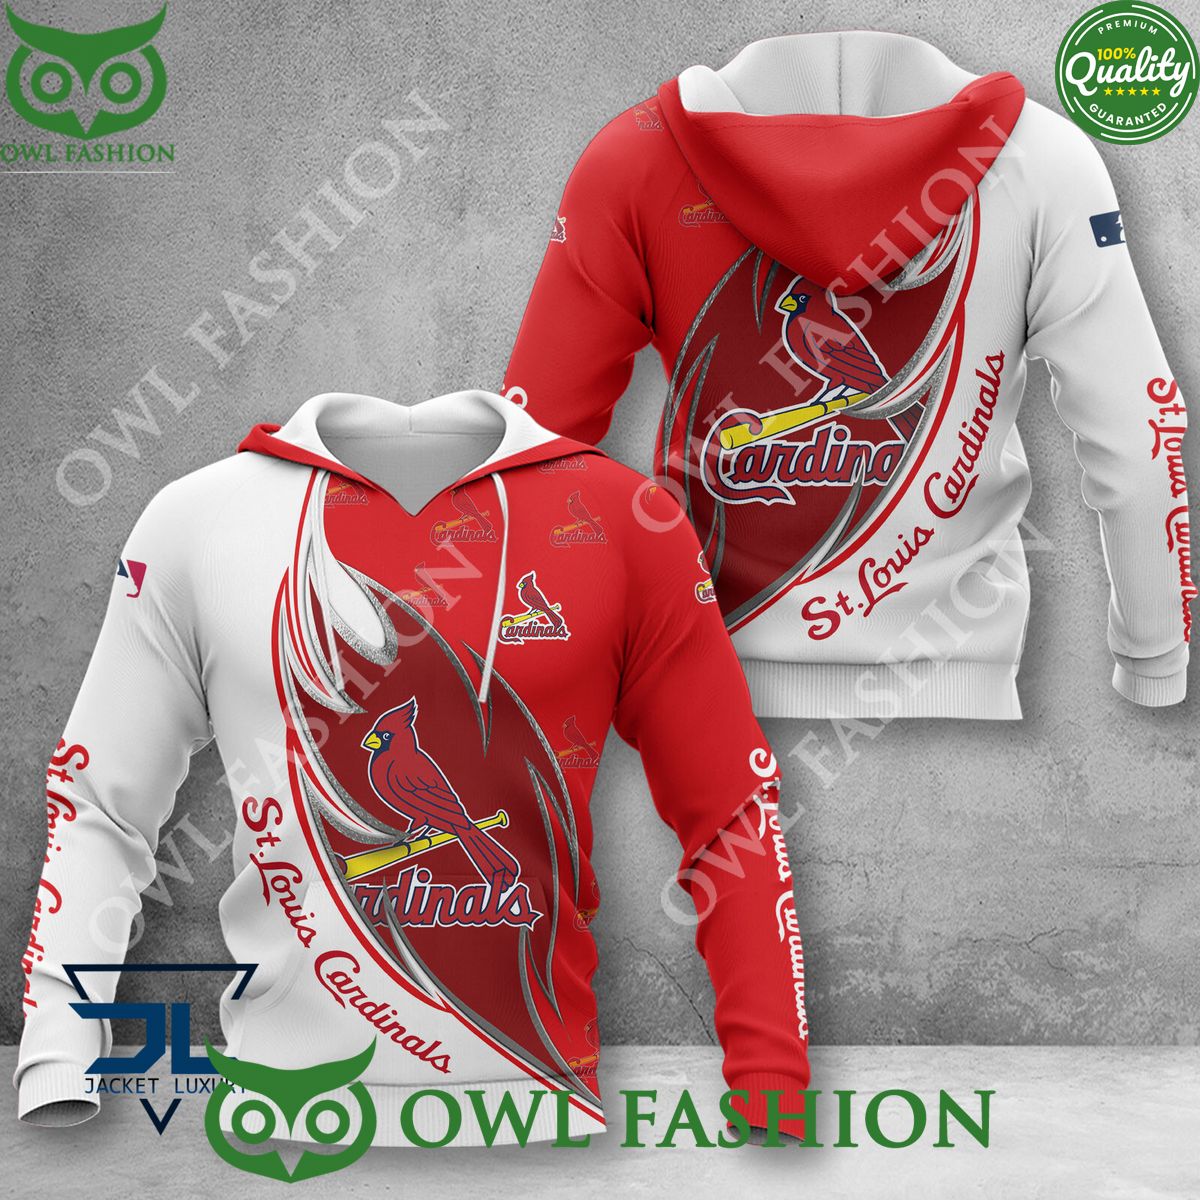 st louis cardinals mlb baseball team hoodie shirt 1 iVmX3.jpg